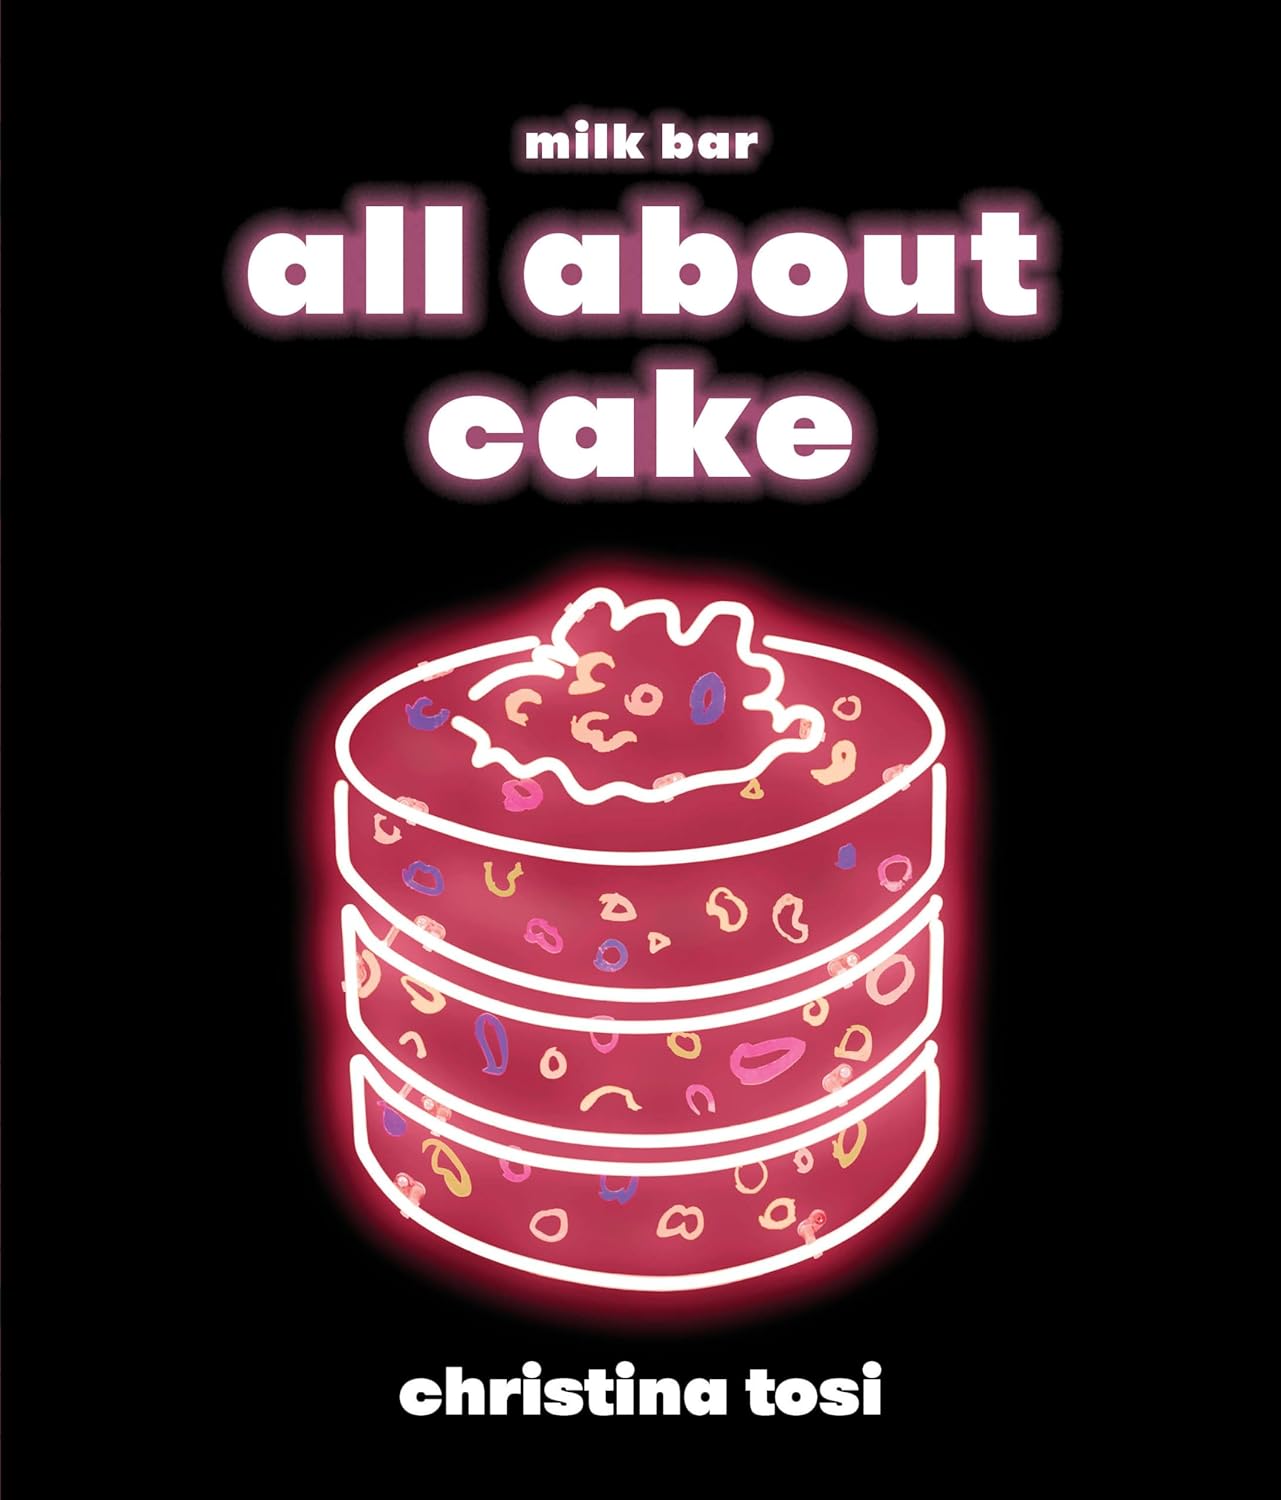 All About Cake: A Milk Bar Cookbook (Christina Tosi)